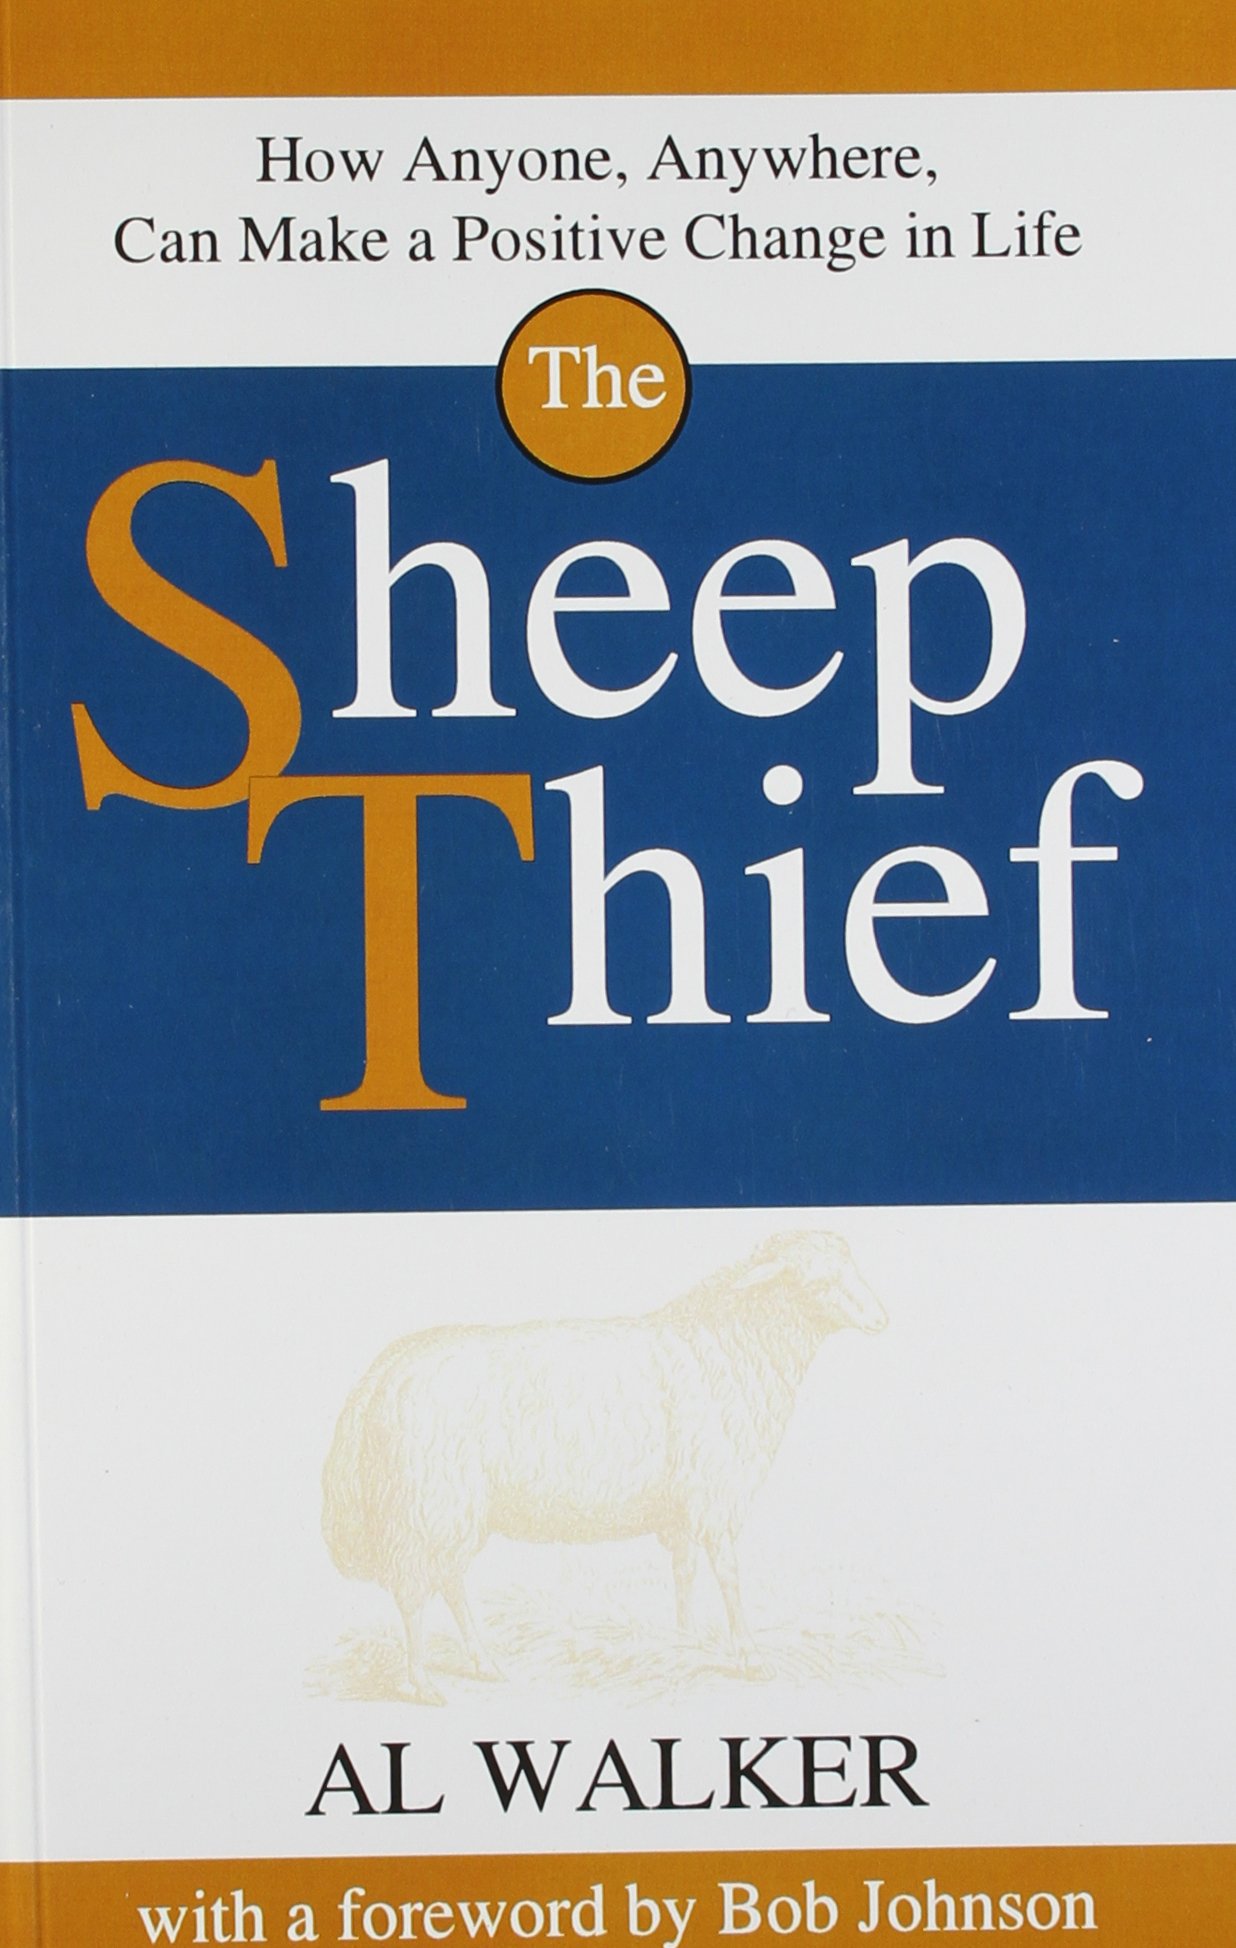 The Sheep Thief